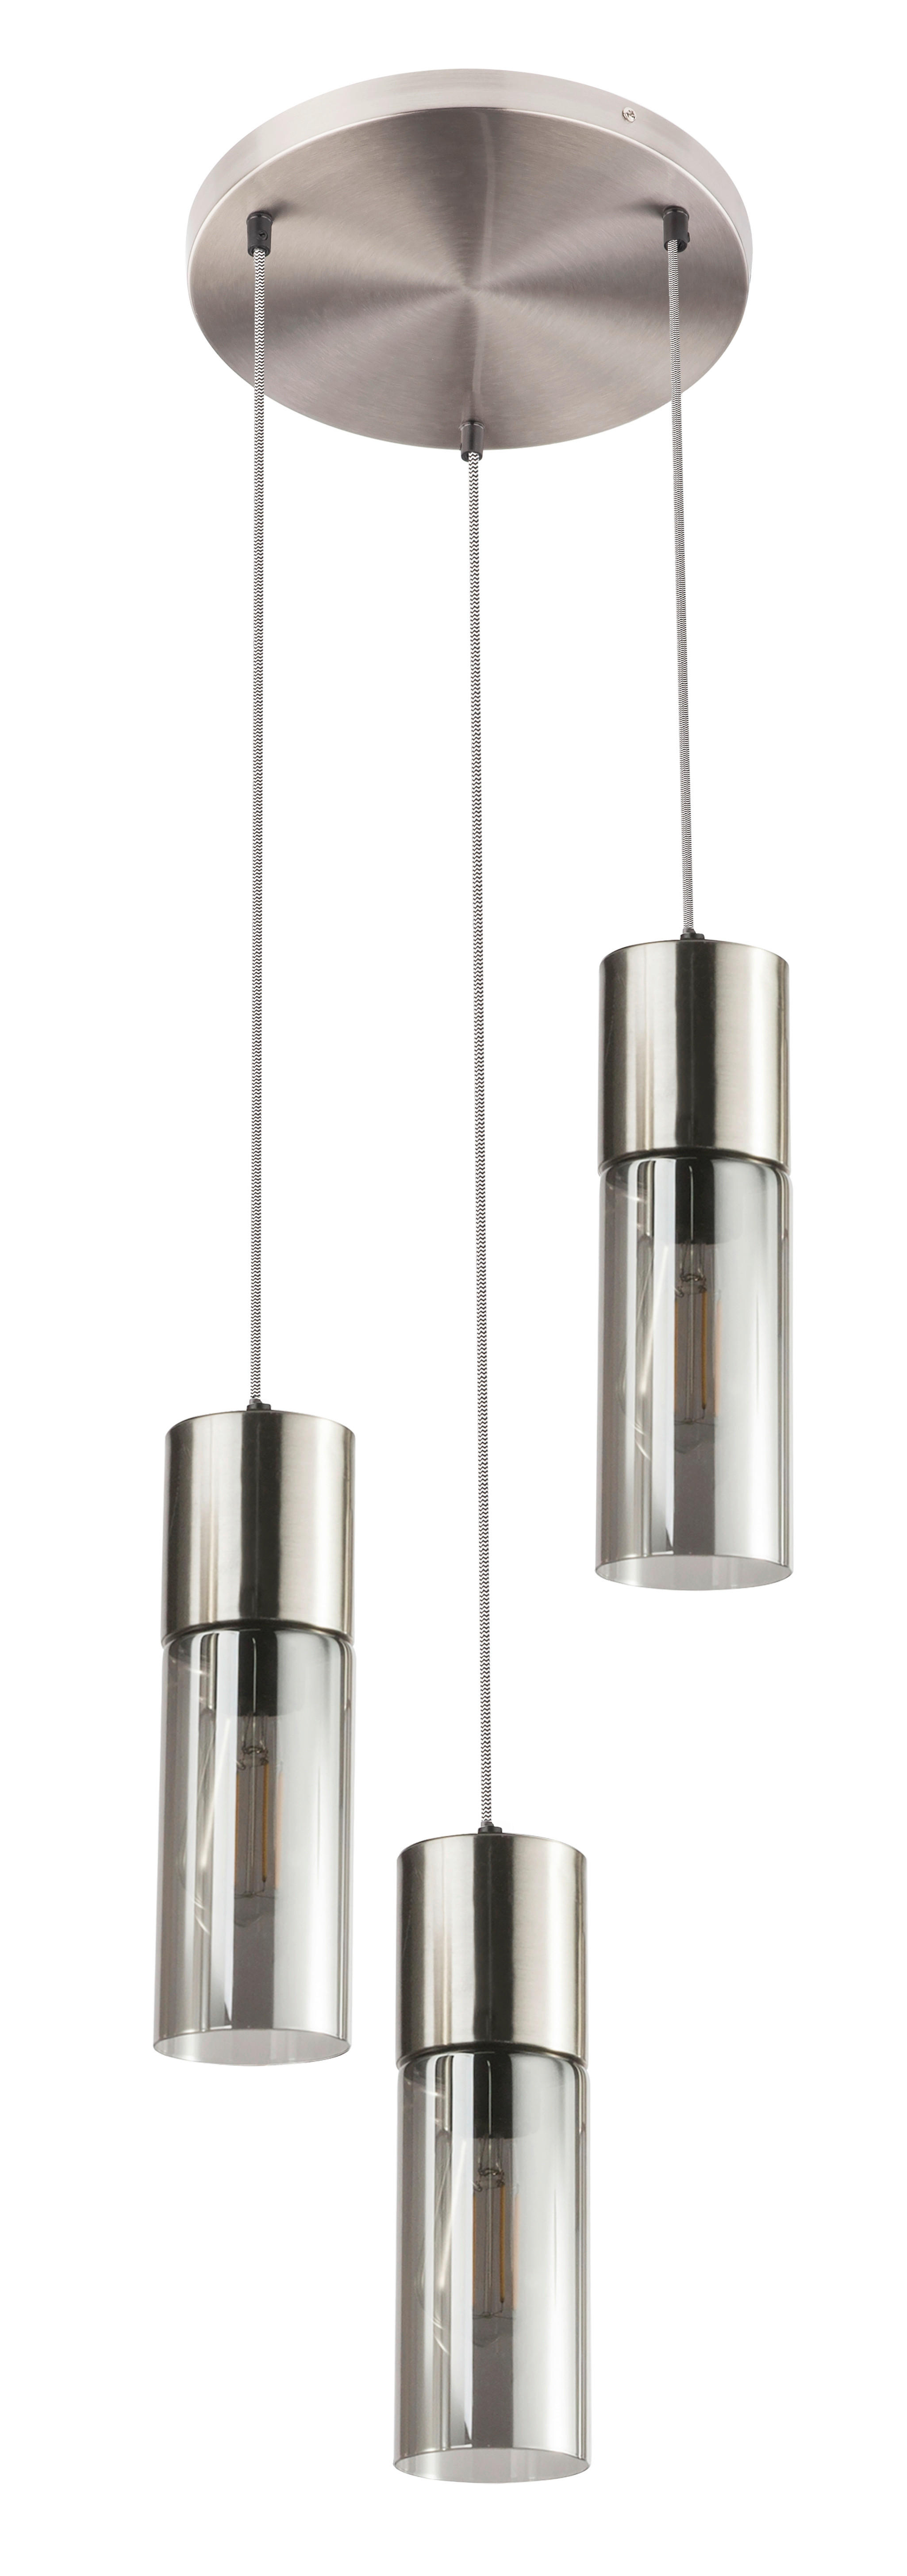 TAKLAMPA 30/150 cm   - nickelfärgad, Design, metall/glas (30/150cm) - Globo